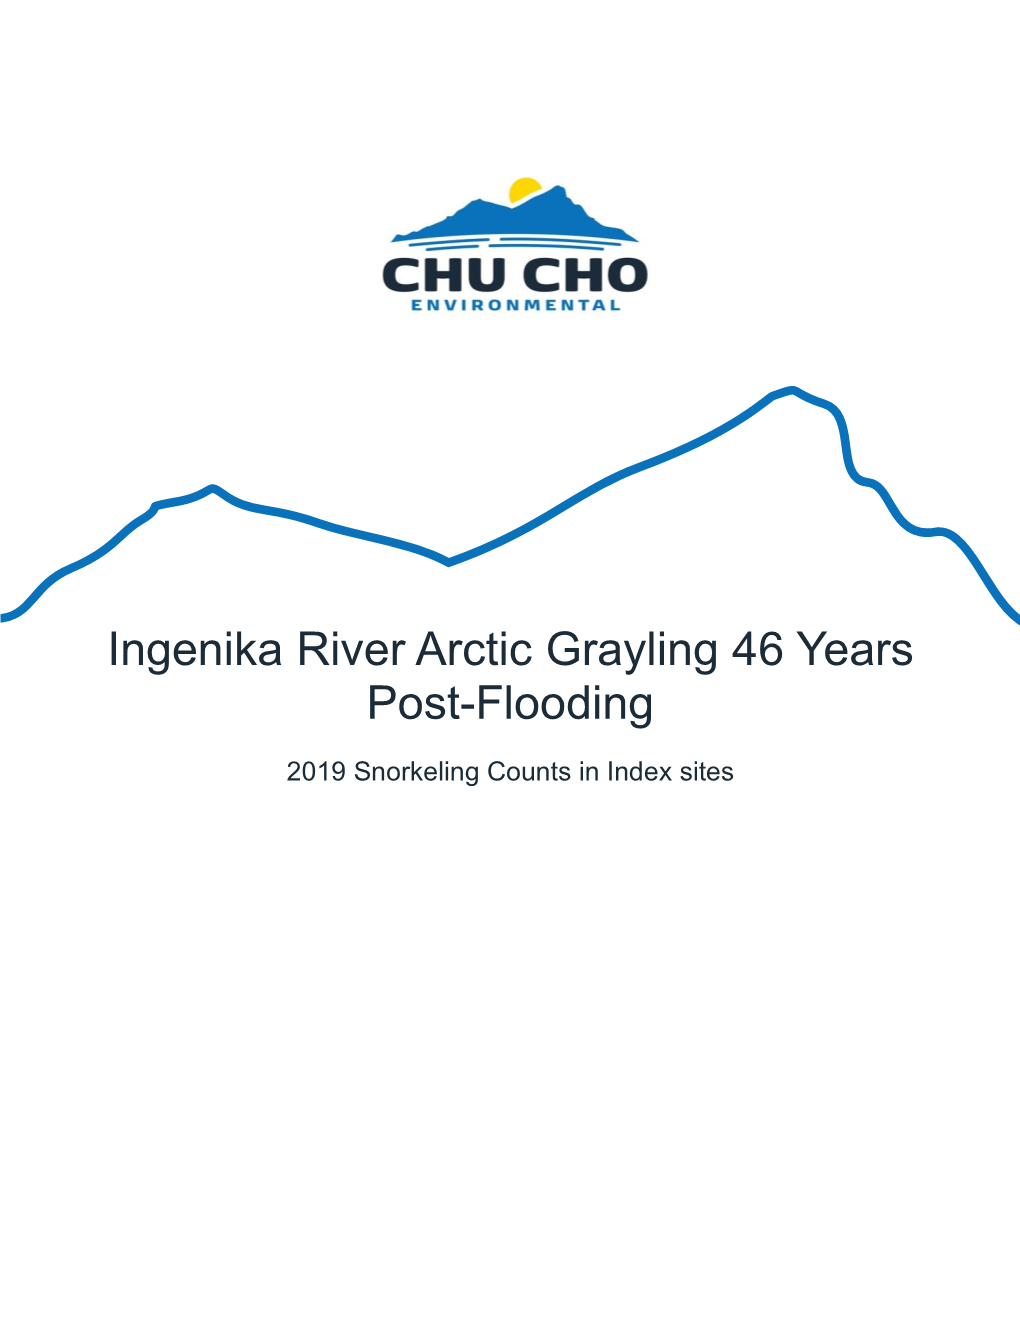 Ingenika River Arctic Grayling 46 Years Post-Flooding